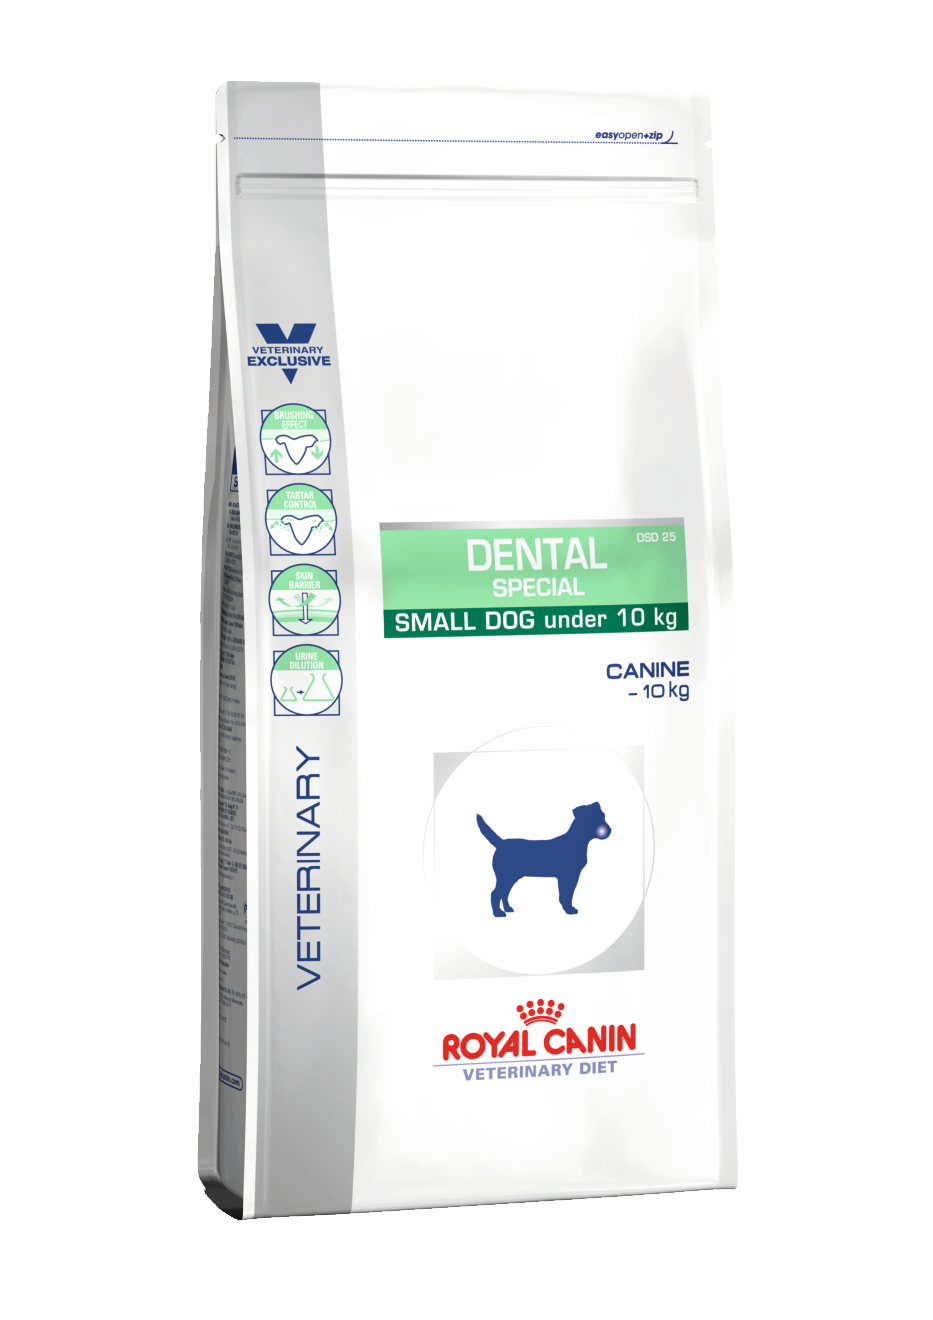 dental-special-small-dog-packaging-graphical-codes-vdd-dental-sd-packshot